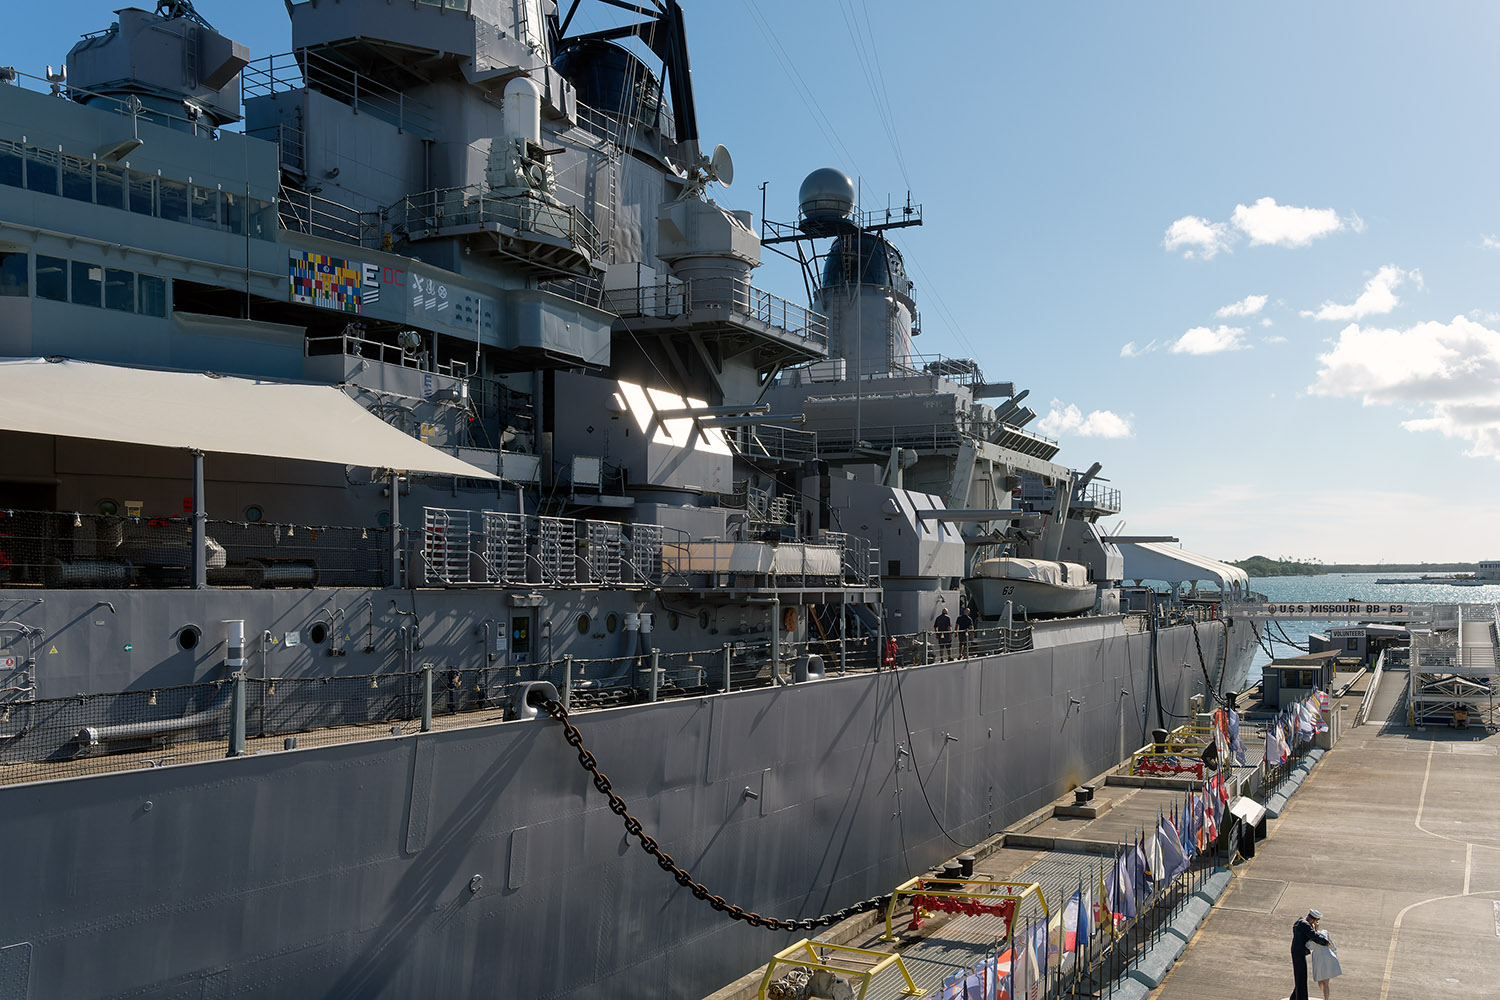 The Iowa-class U.S.S. Missouri is the most powerful battleship the US ever built